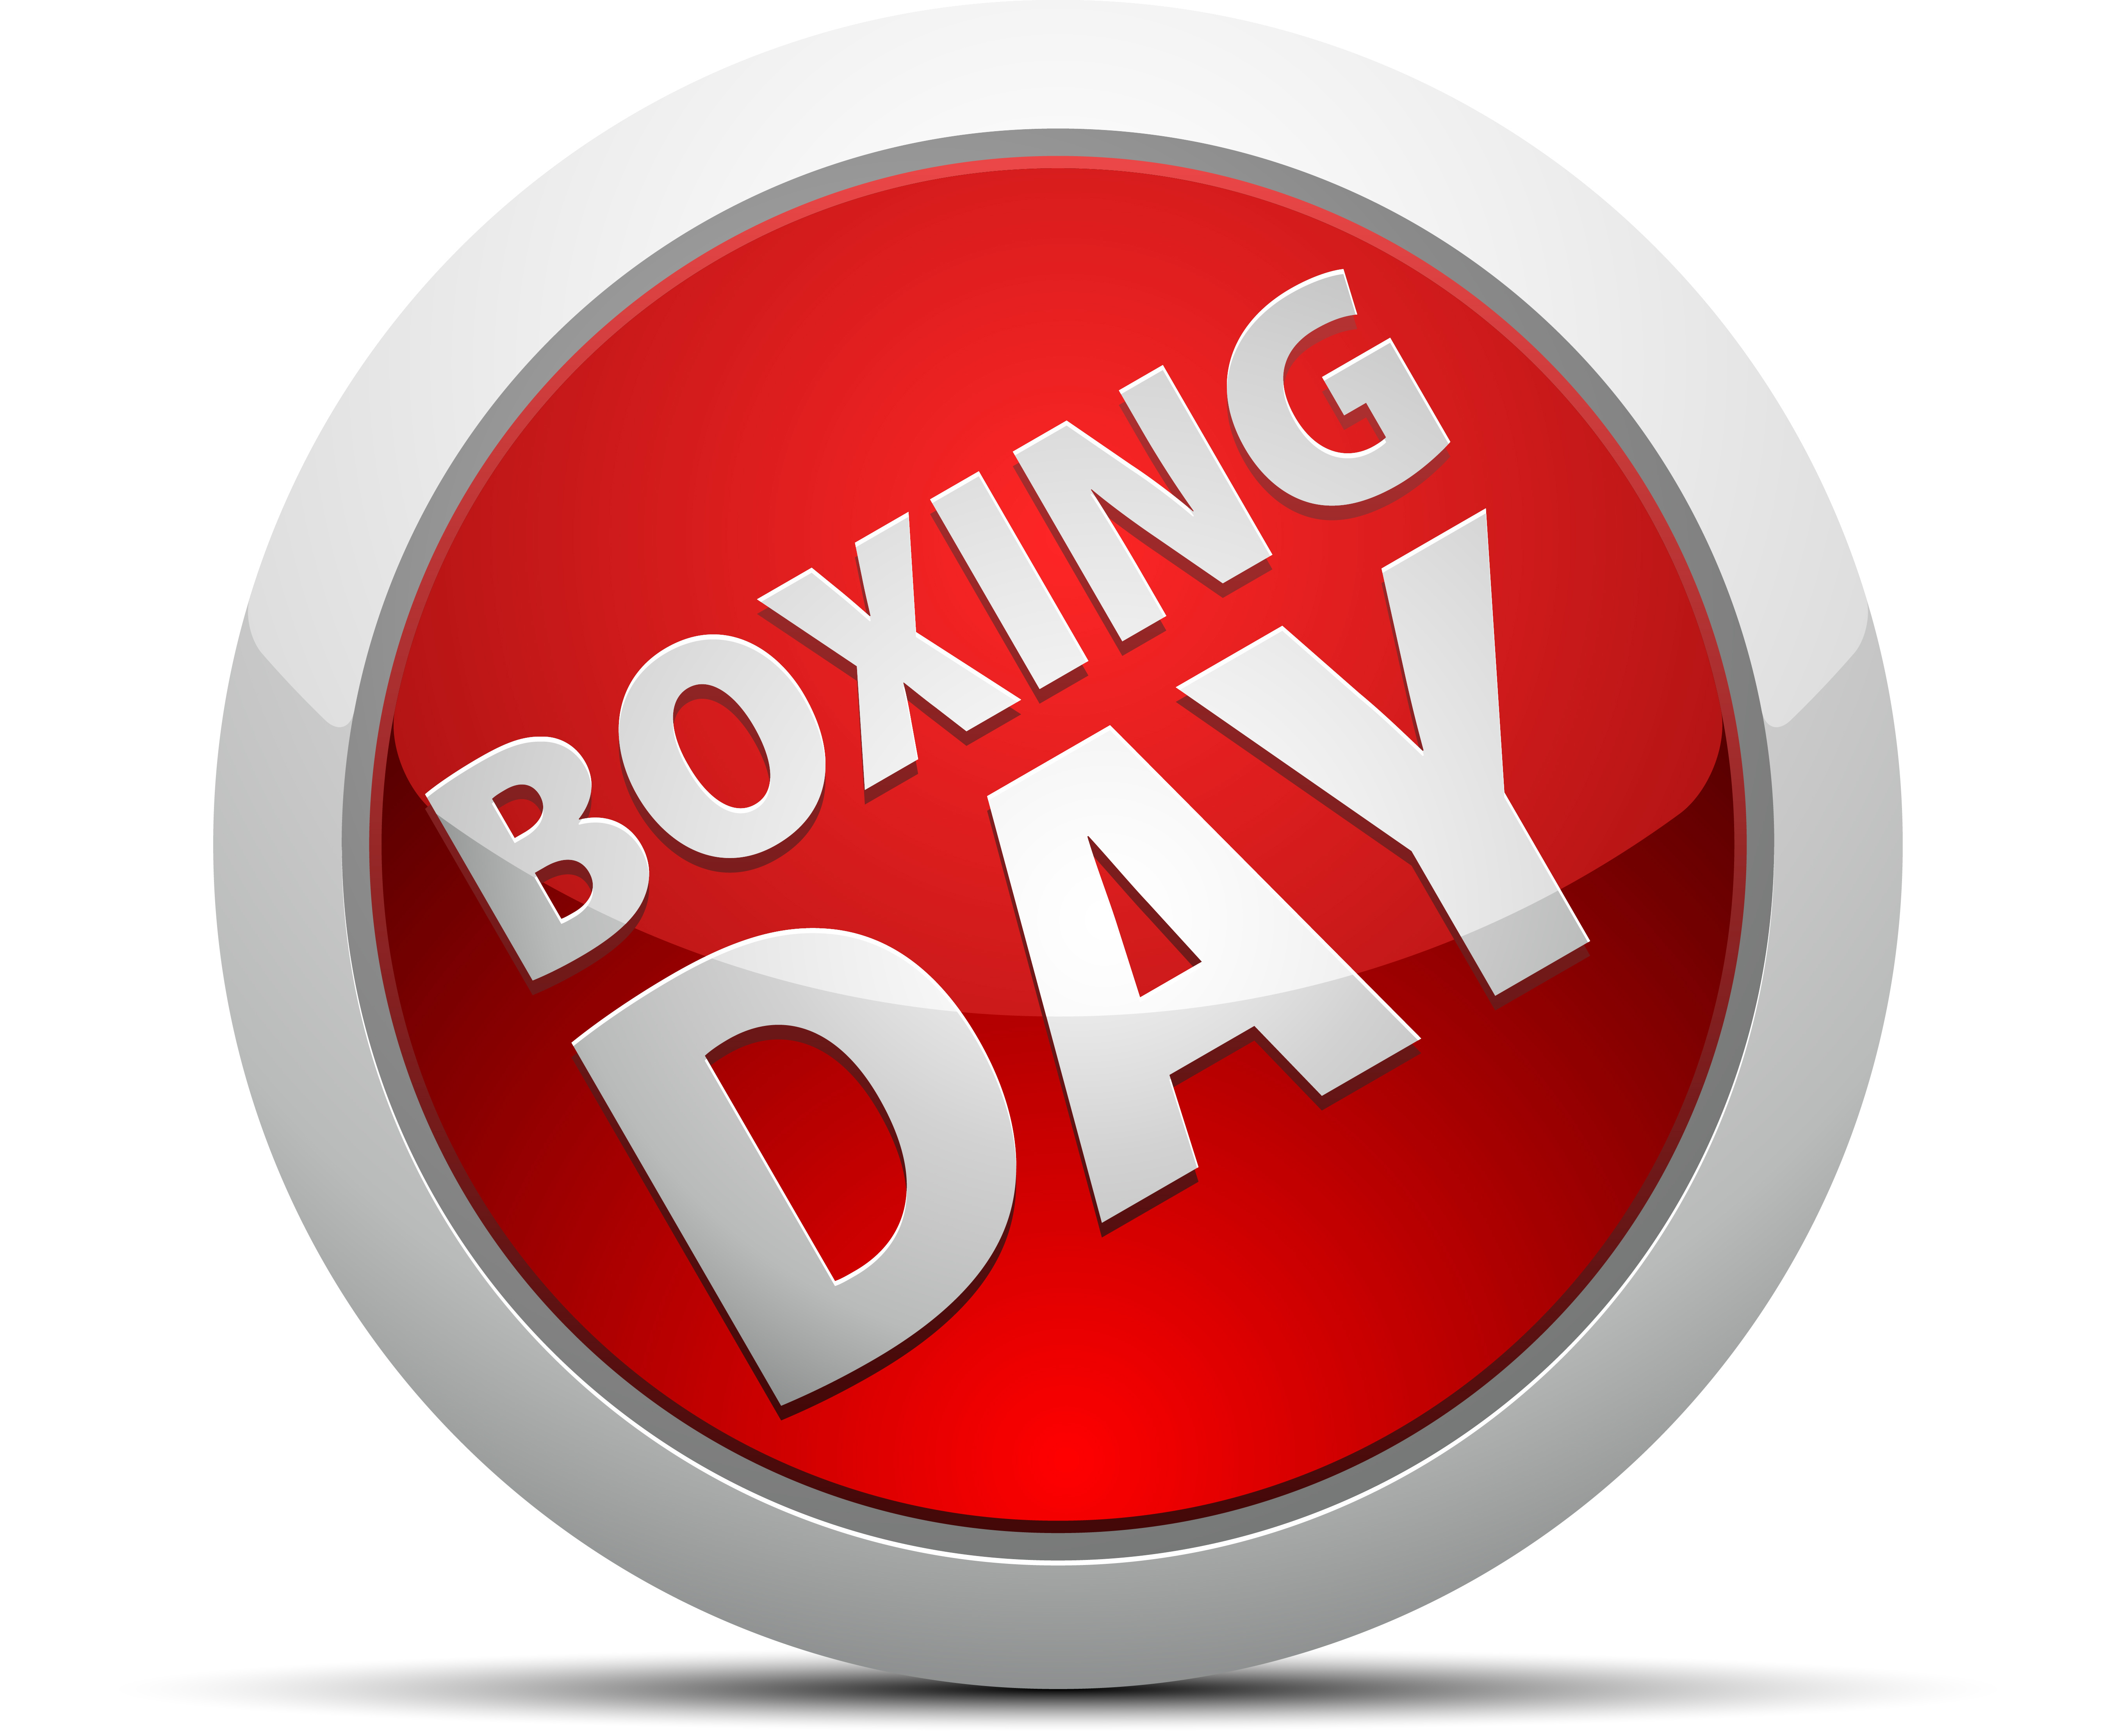 L’offre “Boxing Day” de Location EEKO